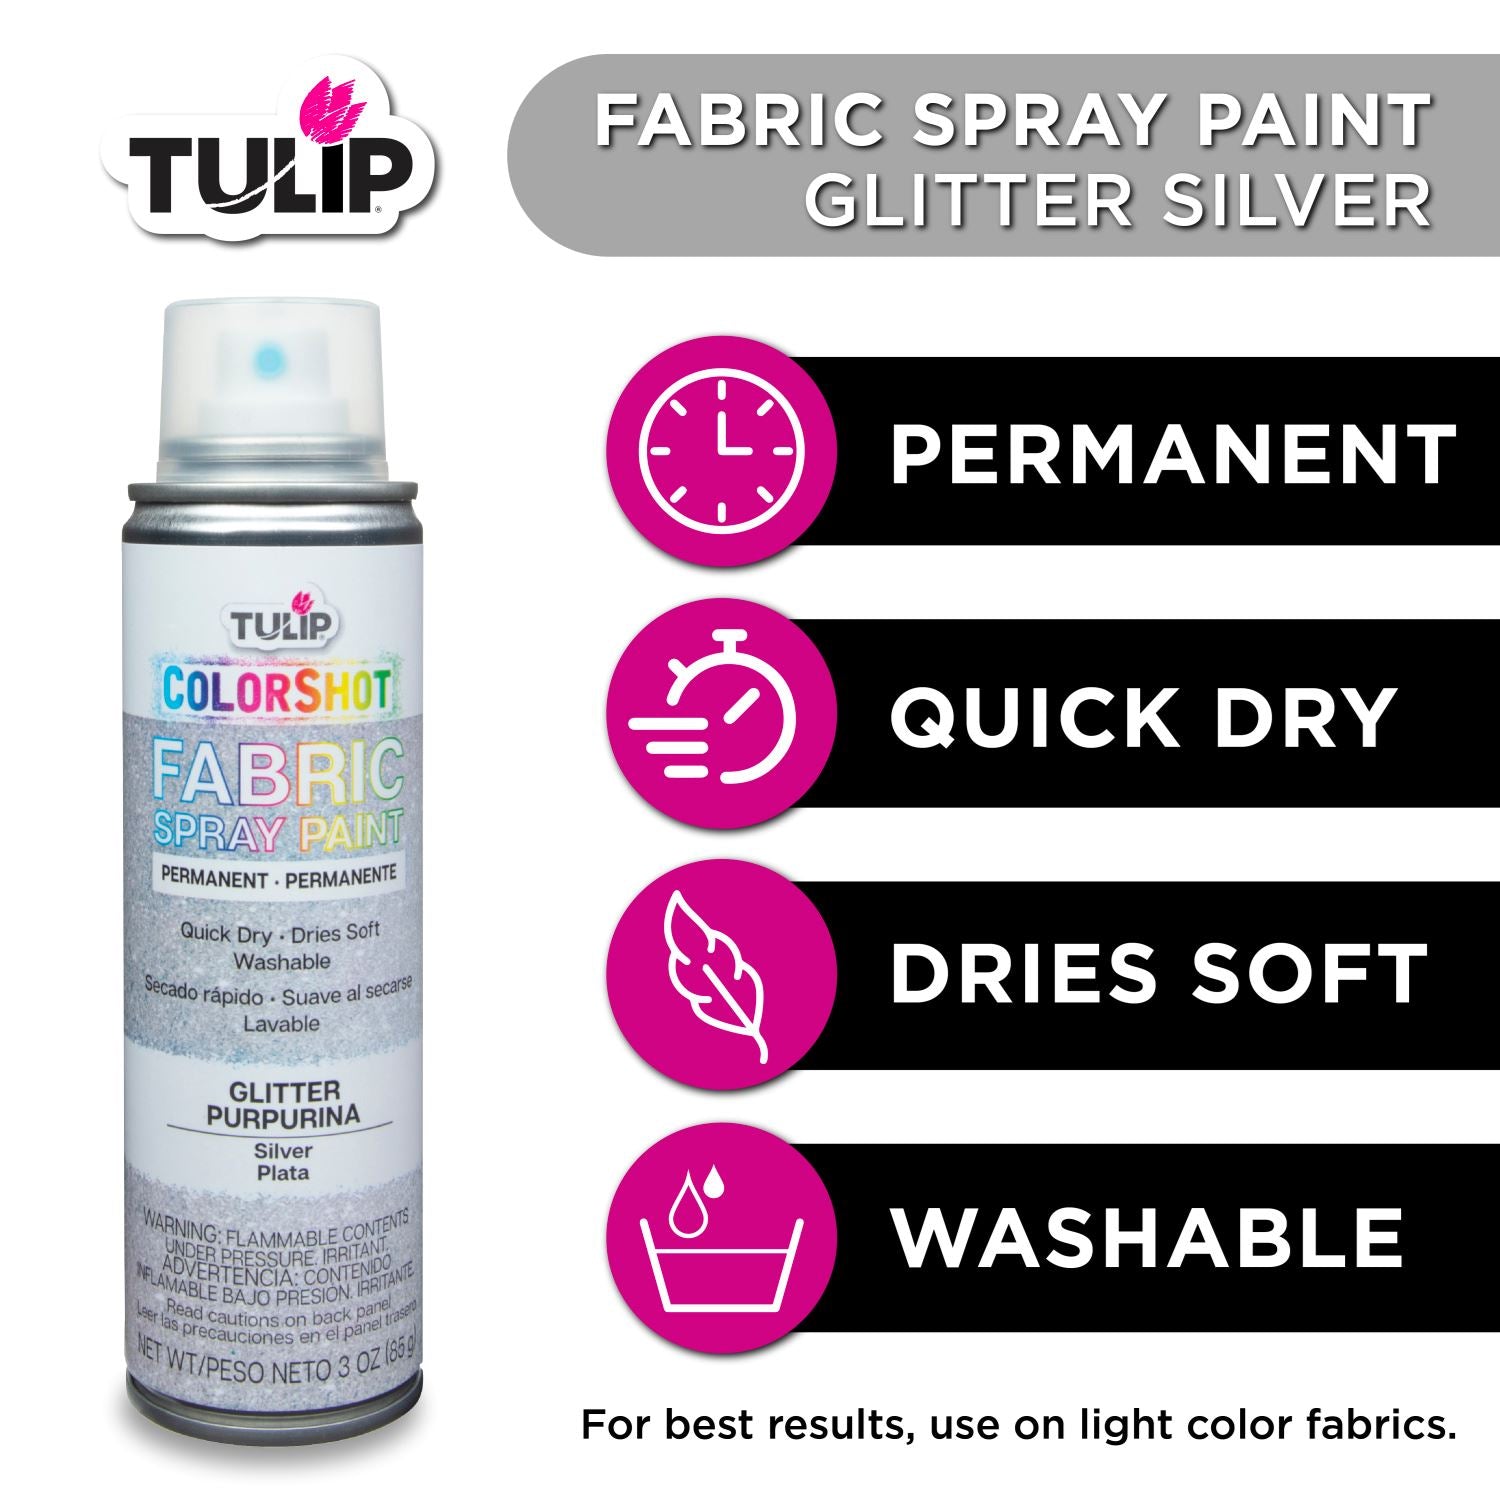  Tulip ColorShot Instant Fabric Color 3oz. Silver Shimmer